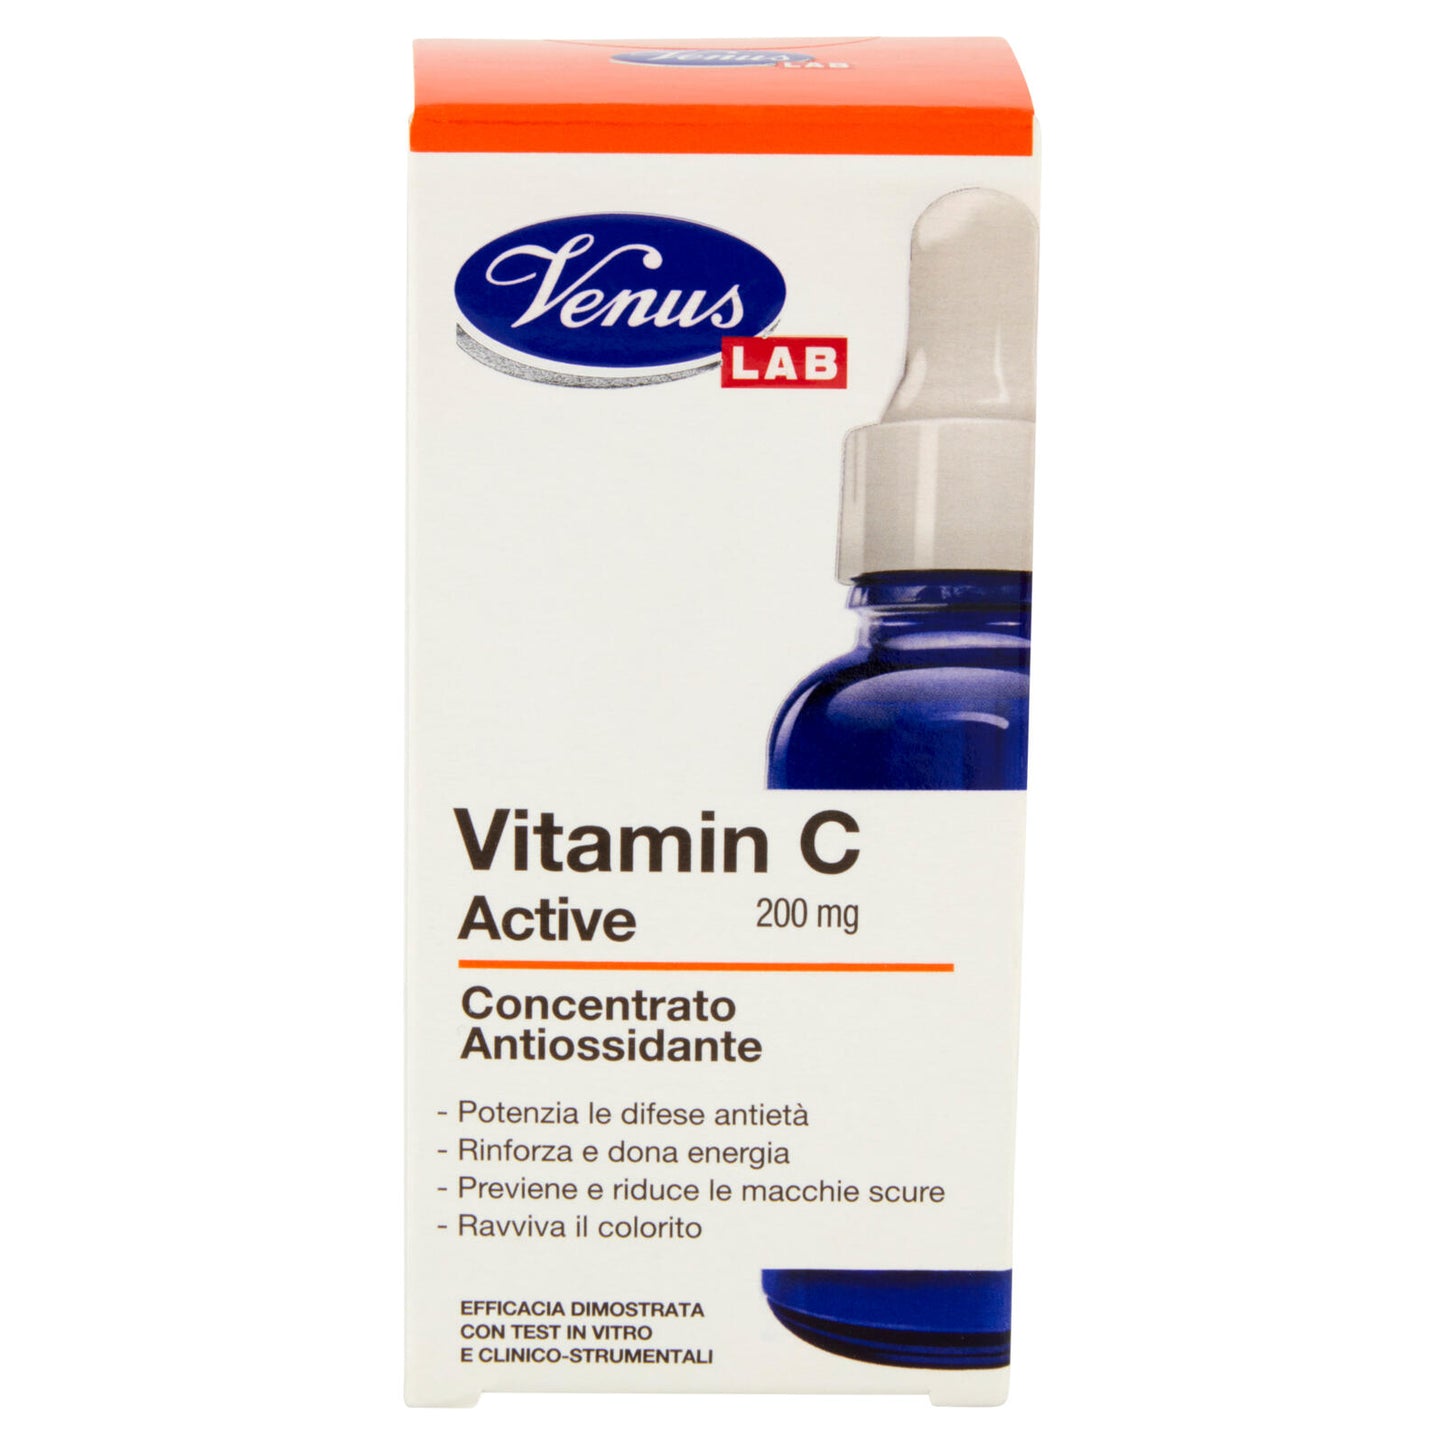 Venus Lab Vitamin C Active Concentrato Antiossidante 30 mL